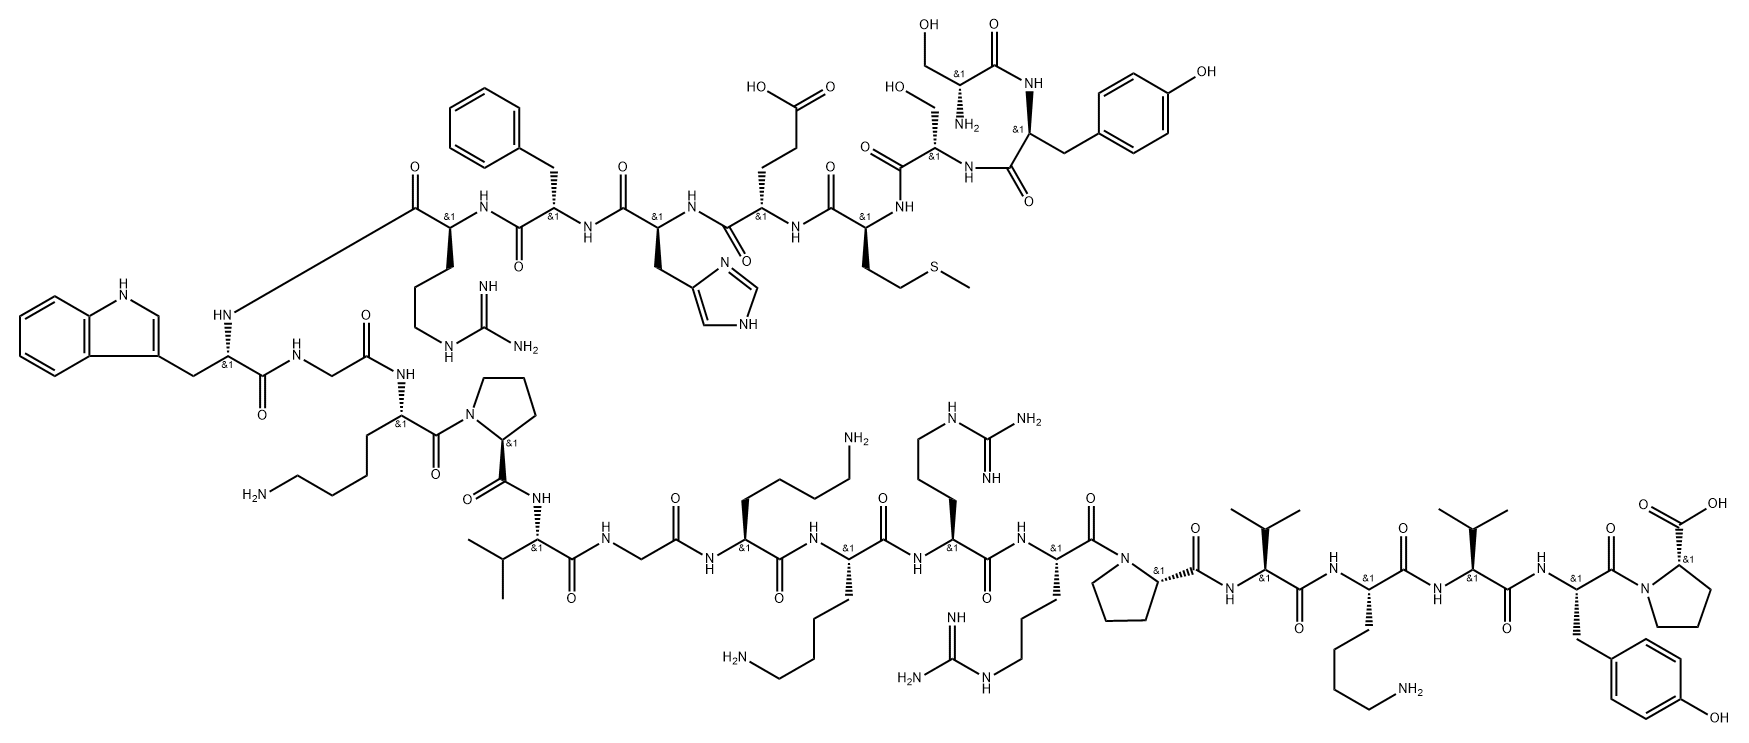 促肾上腺皮质激素(D-SER1)-ACTH (1-24) (HUMAN, BOVINE, RAT), 18067-65-7, 结构式